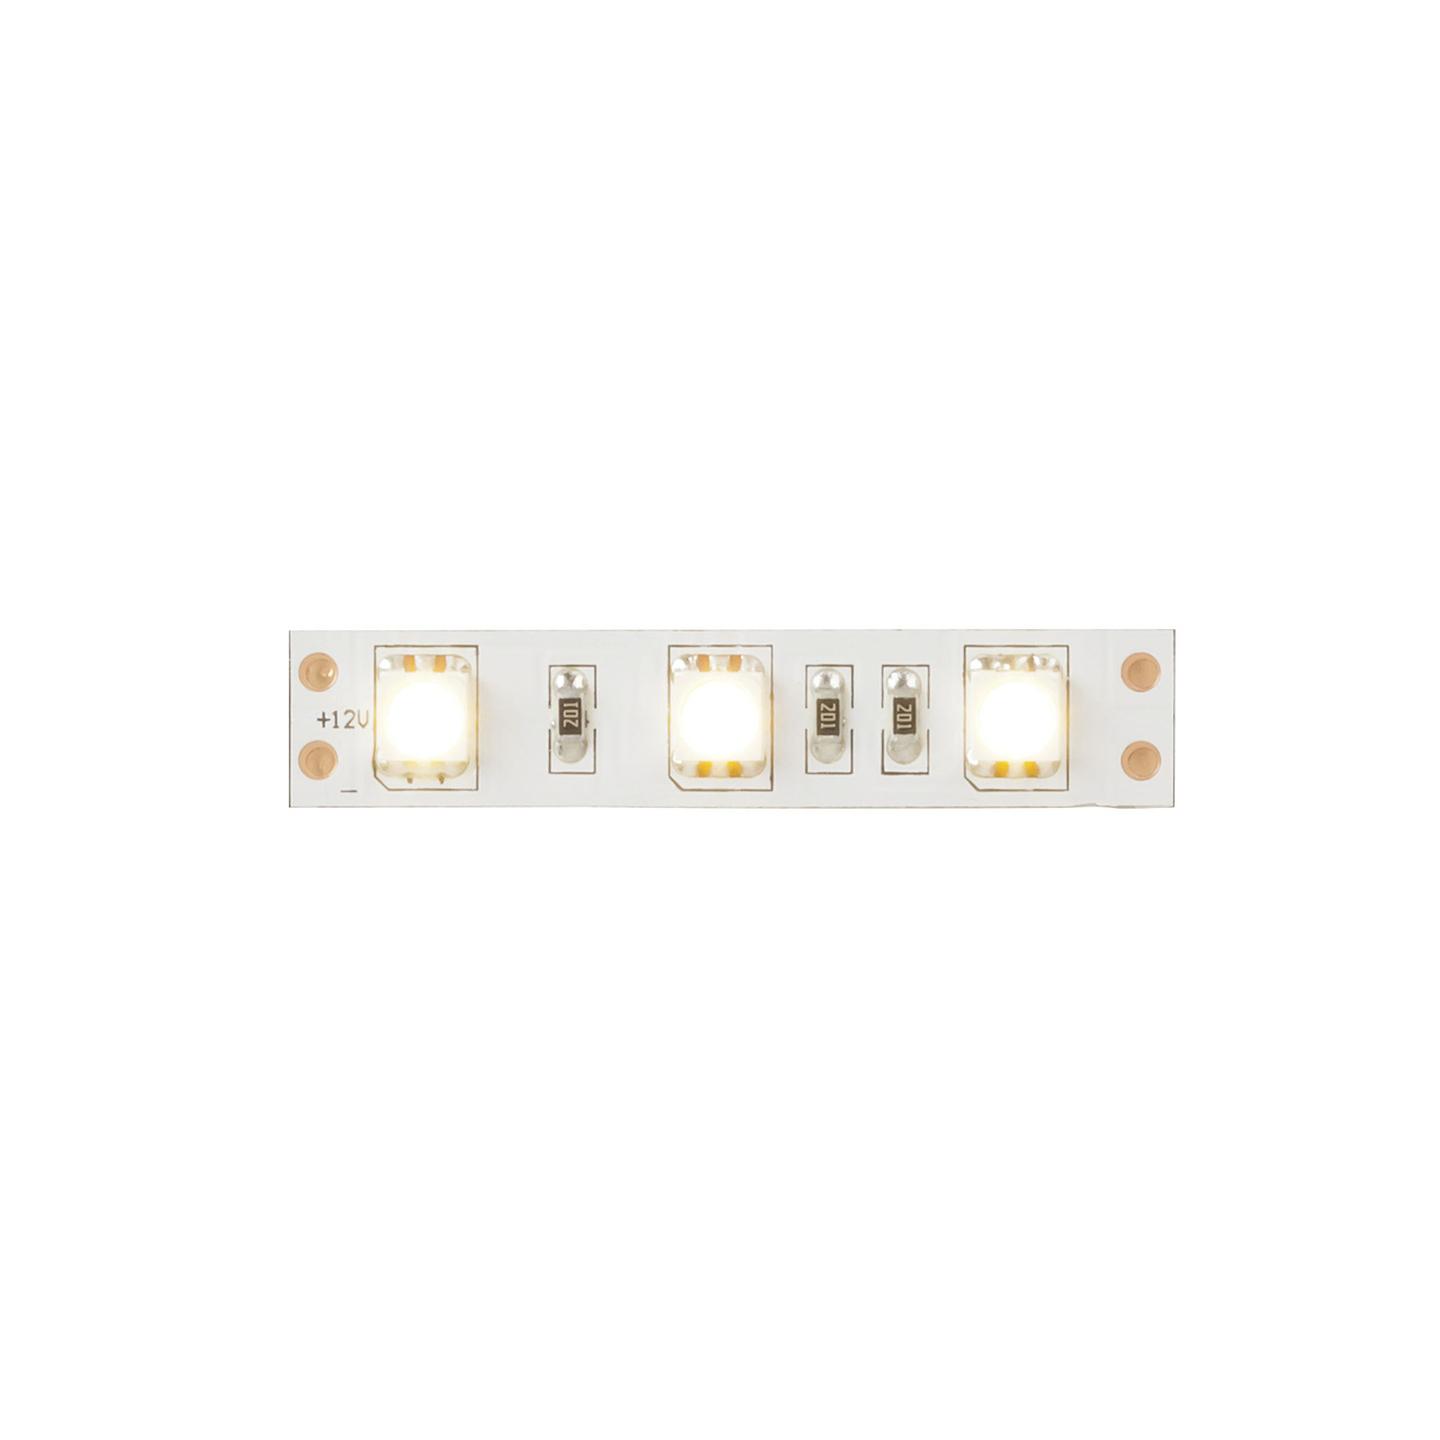 5cm Flexible Adhesive LED Strip - Warm White